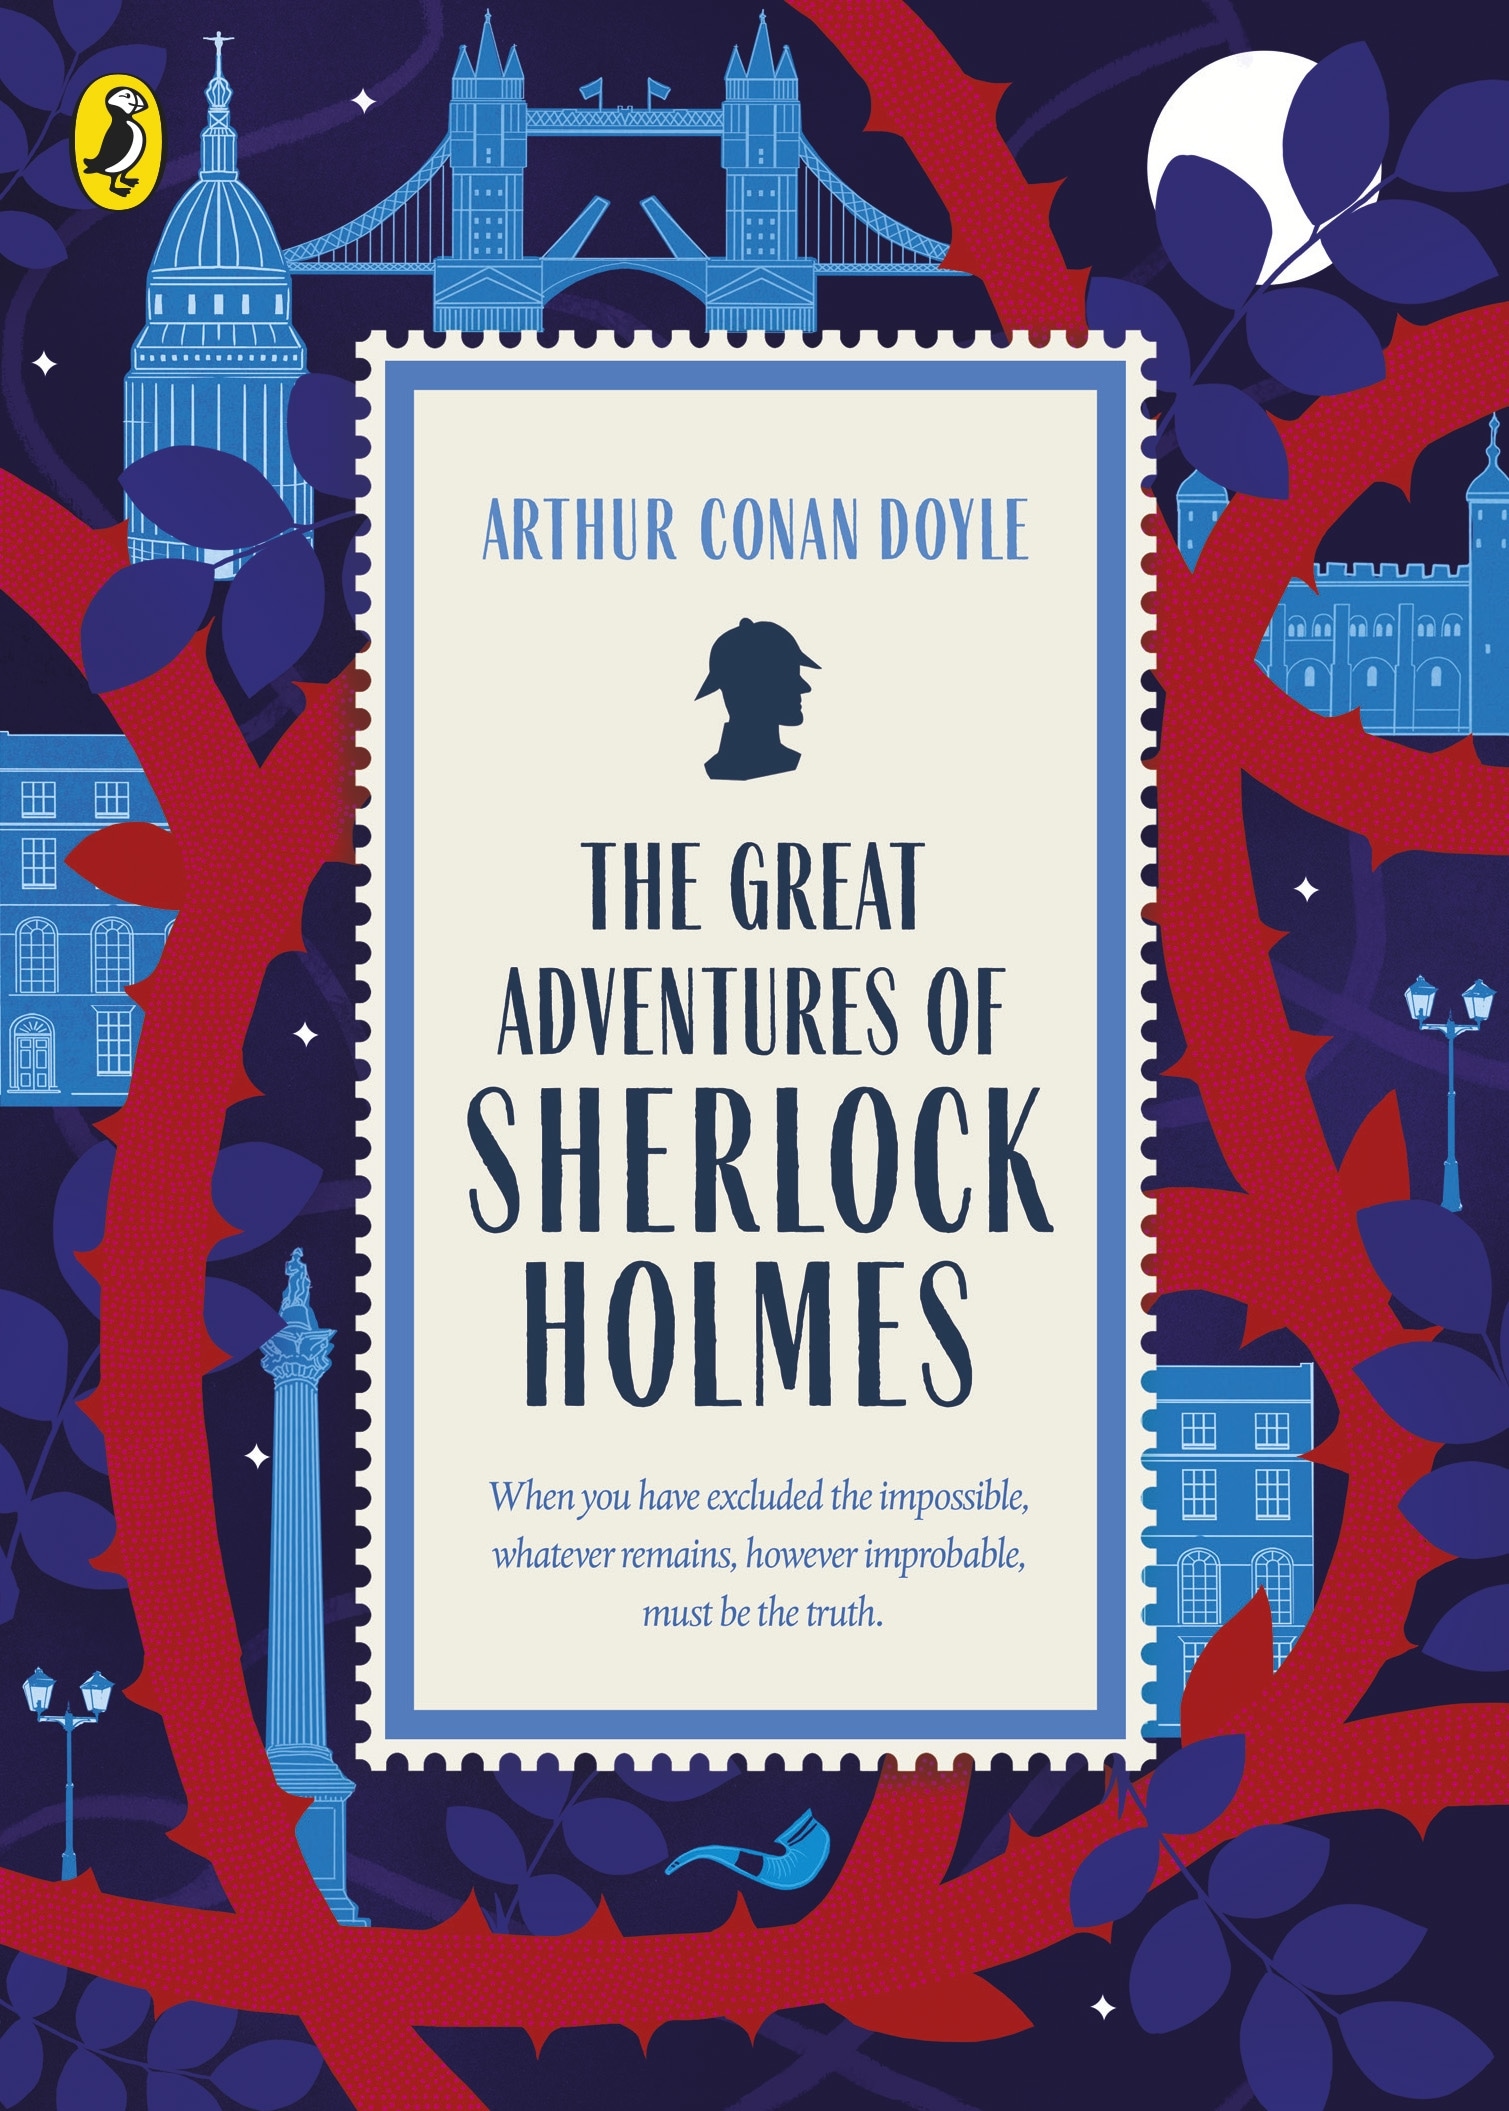 Book “The Great Adventures of Sherlock Holmes” by Arthur Conan Doyle — January 7, 2021